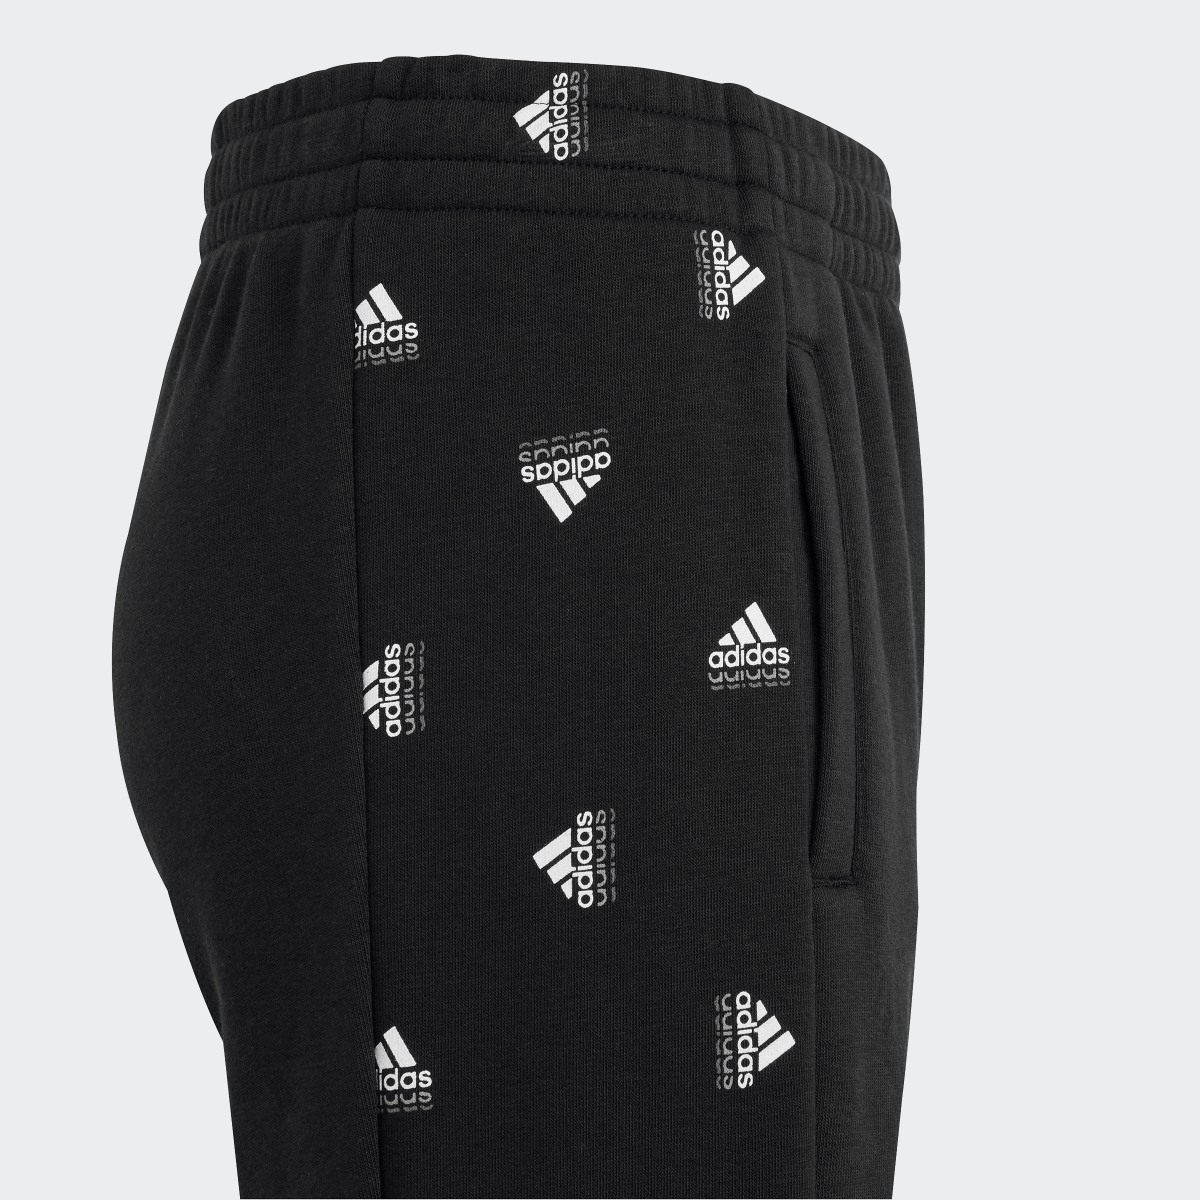 Adidas Brand Love Side Insert Print Pants. 6